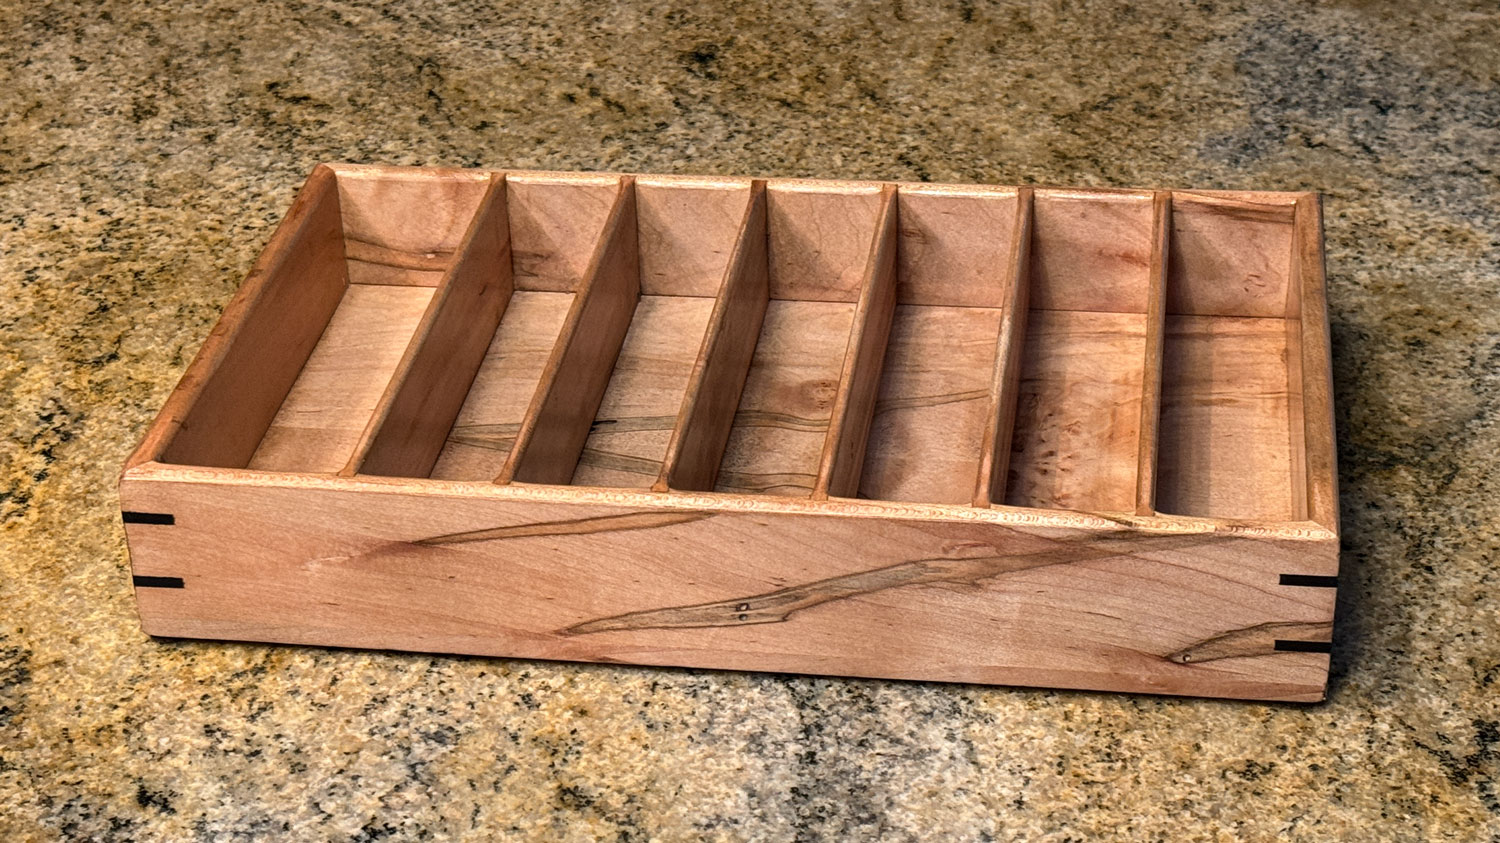 Solid Maple Wood Slat Plank 1/4 x 3 x 12 long Woodworking Kiln Dried  Sanded